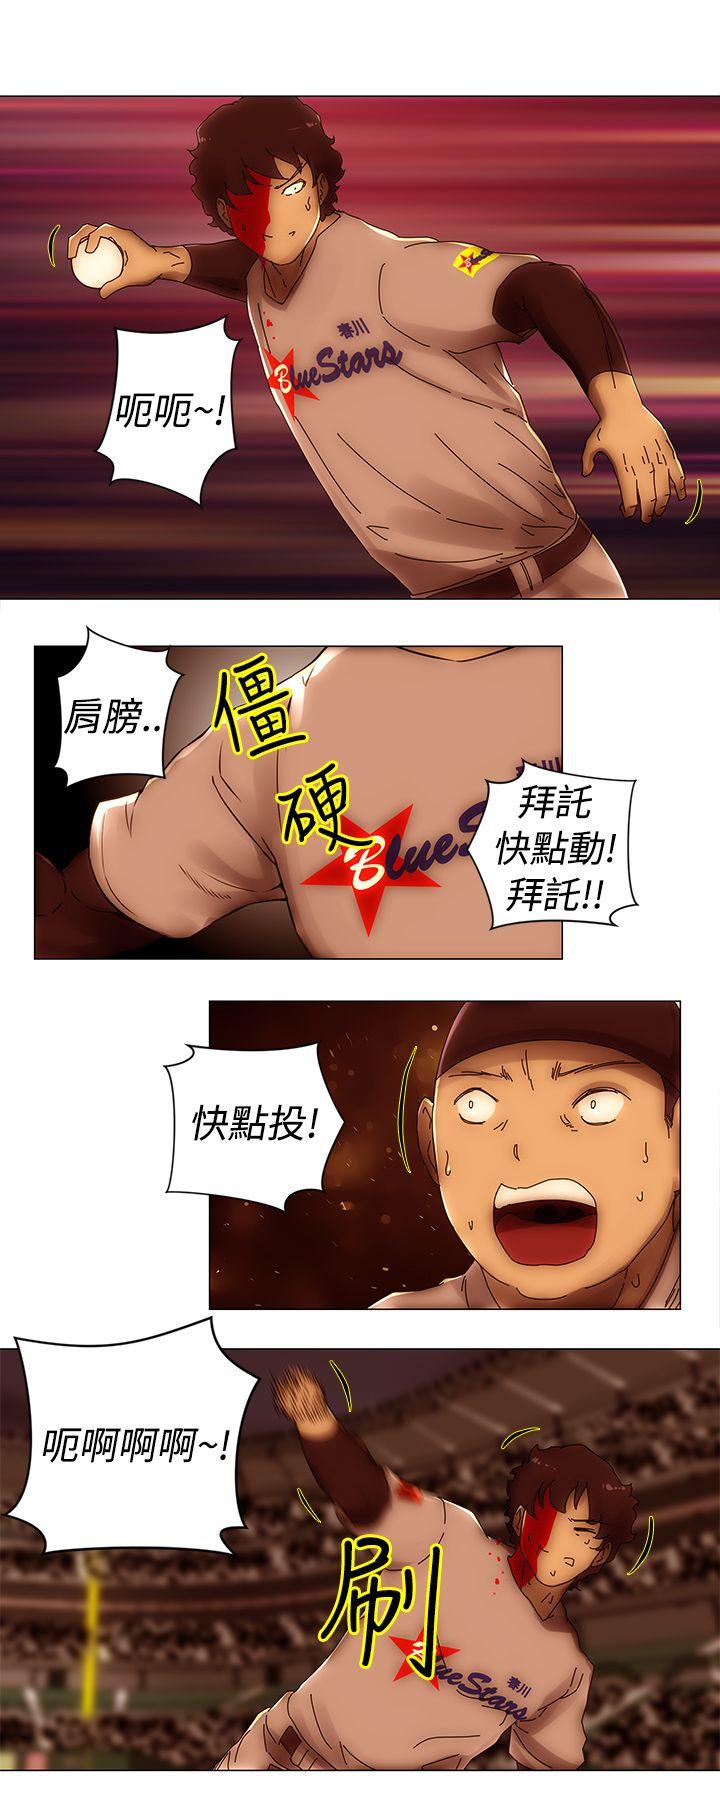 韩国污漫画 Commission 最终话 19